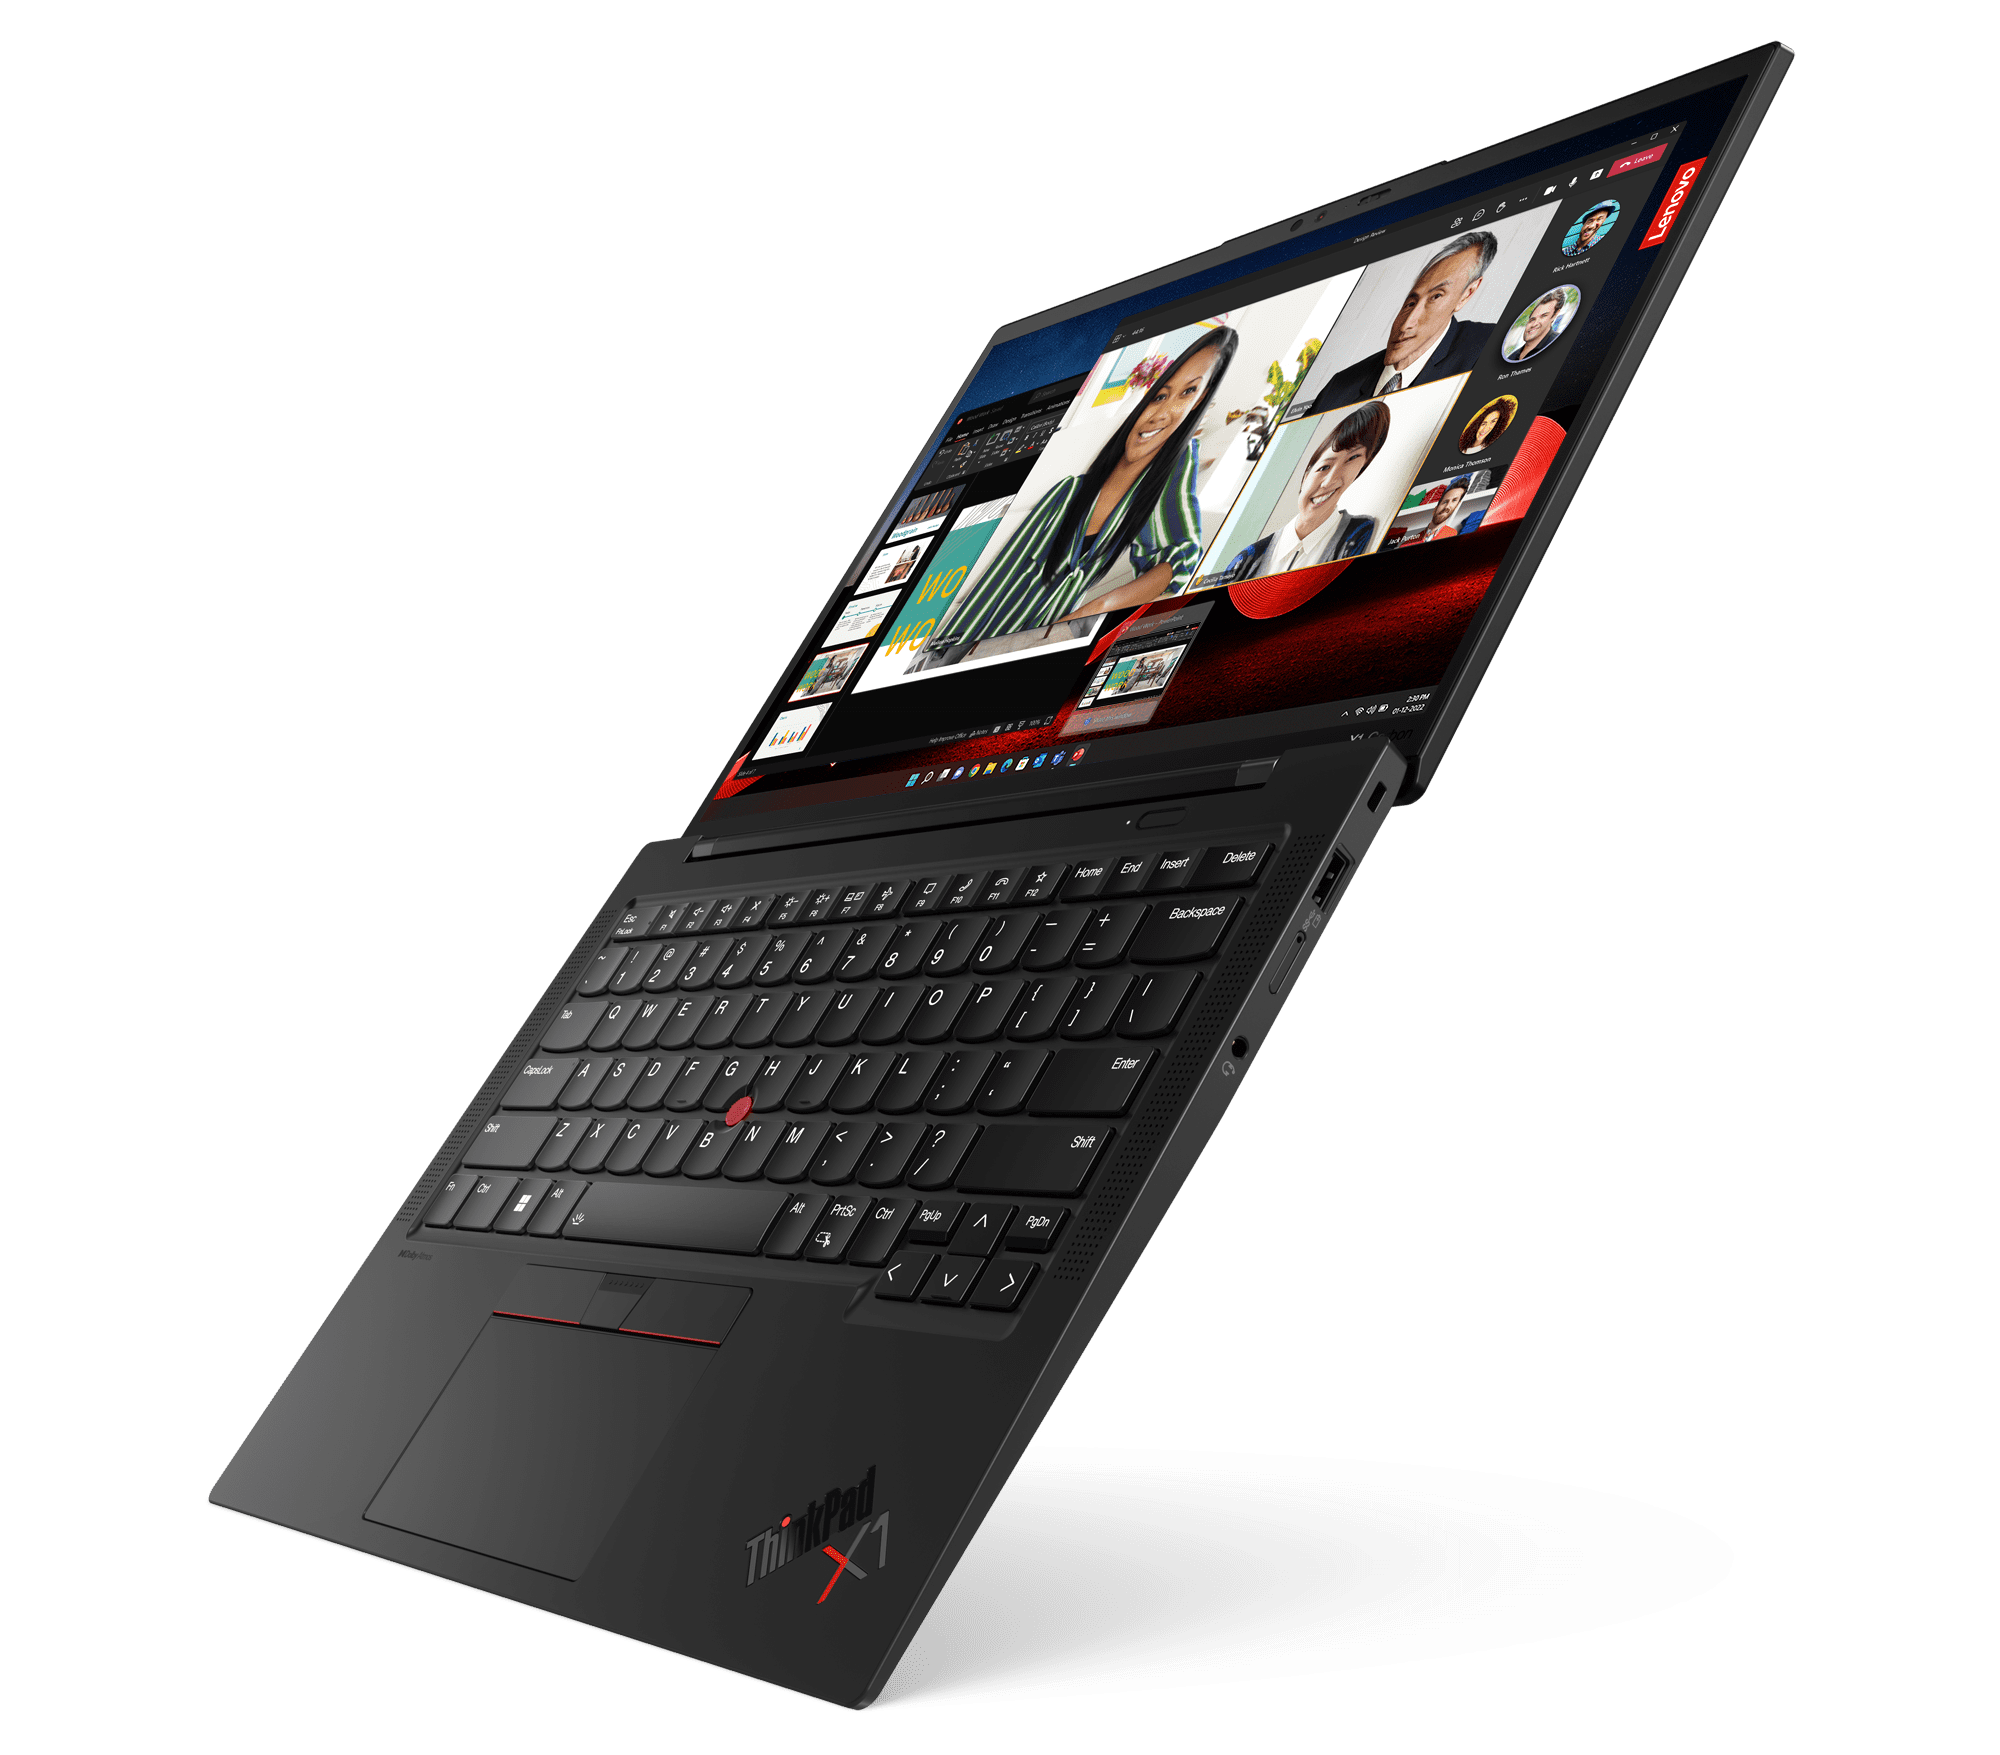 ThinkPad X1, ThinkVision, and Lenovo Go Power Hybrid Working - Lenovo  StoryHub